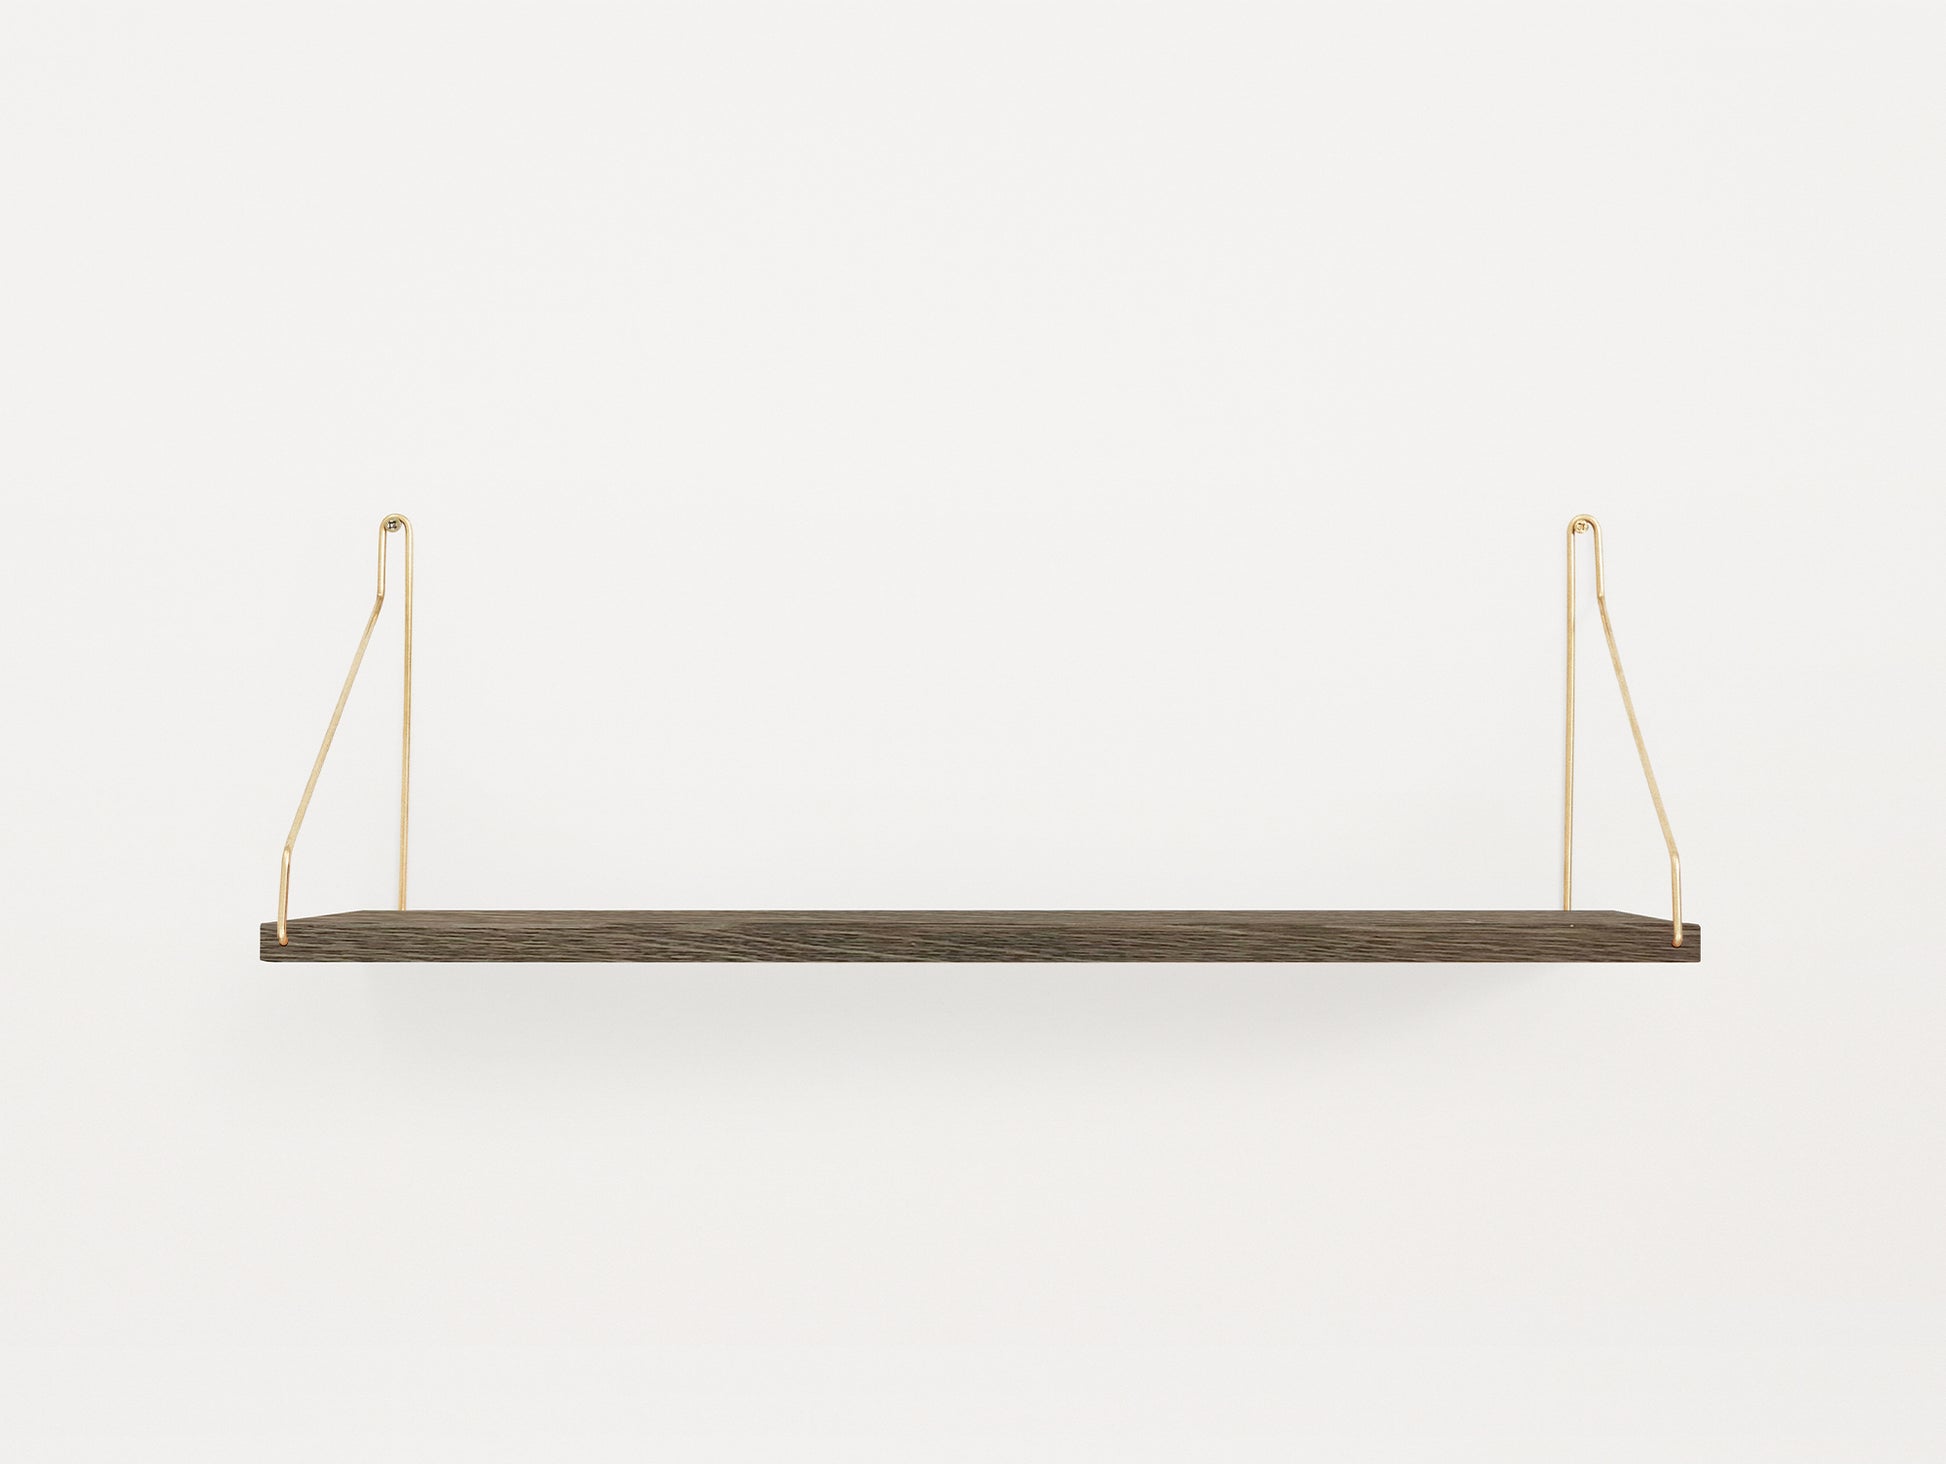 Shelf by Frama - D20 W60 / Dark Stained Oak / Brass Brackets